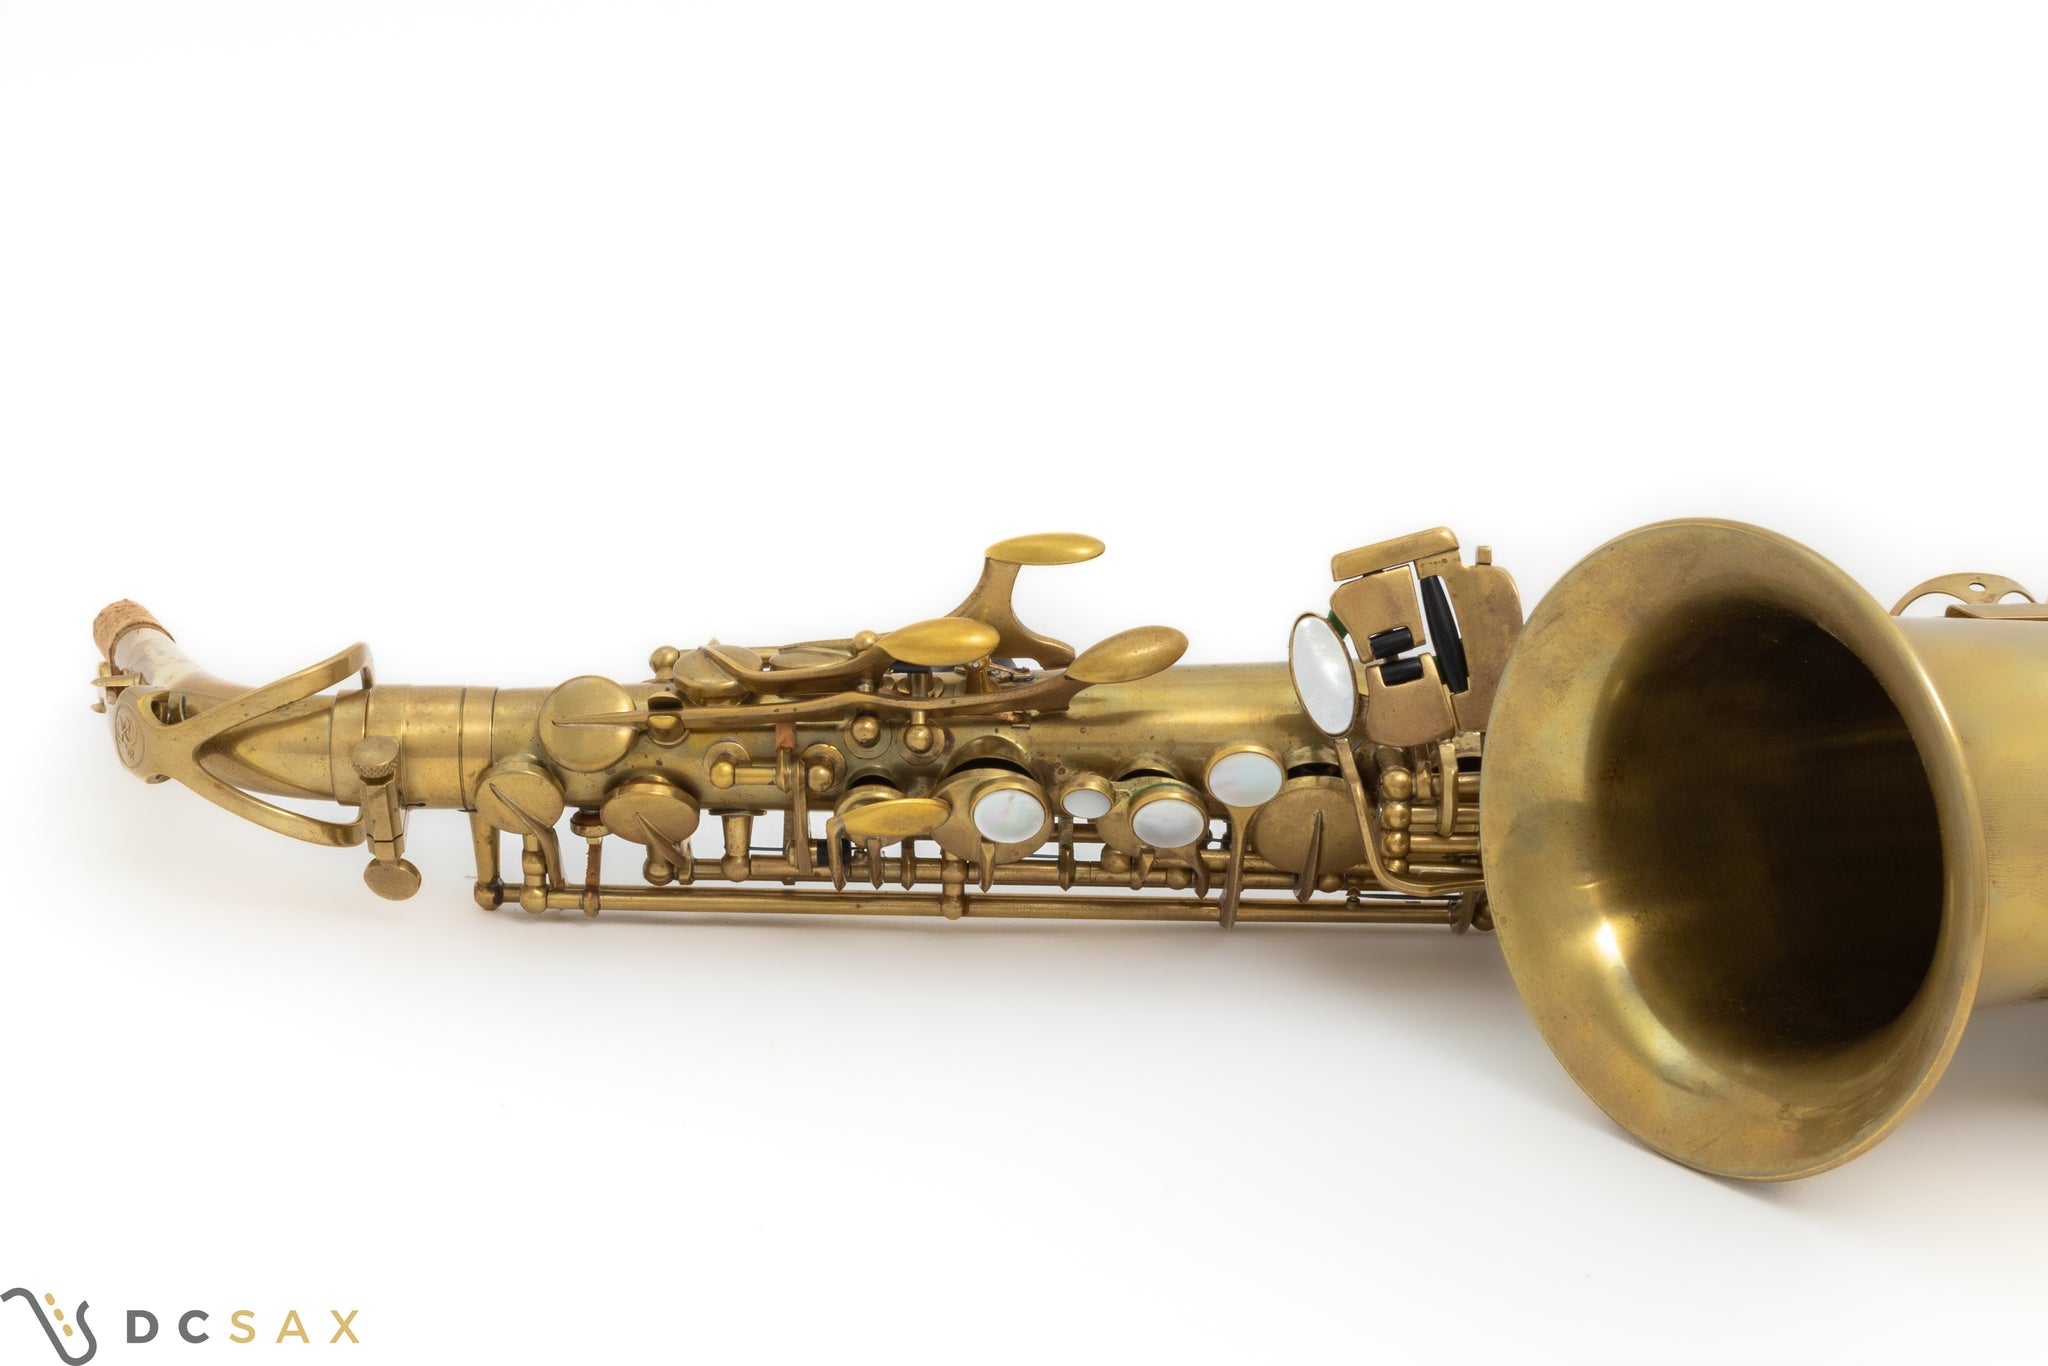 Rampone and Cazzani R1 Jazz Alto Saxophone, Video, Just Serviced